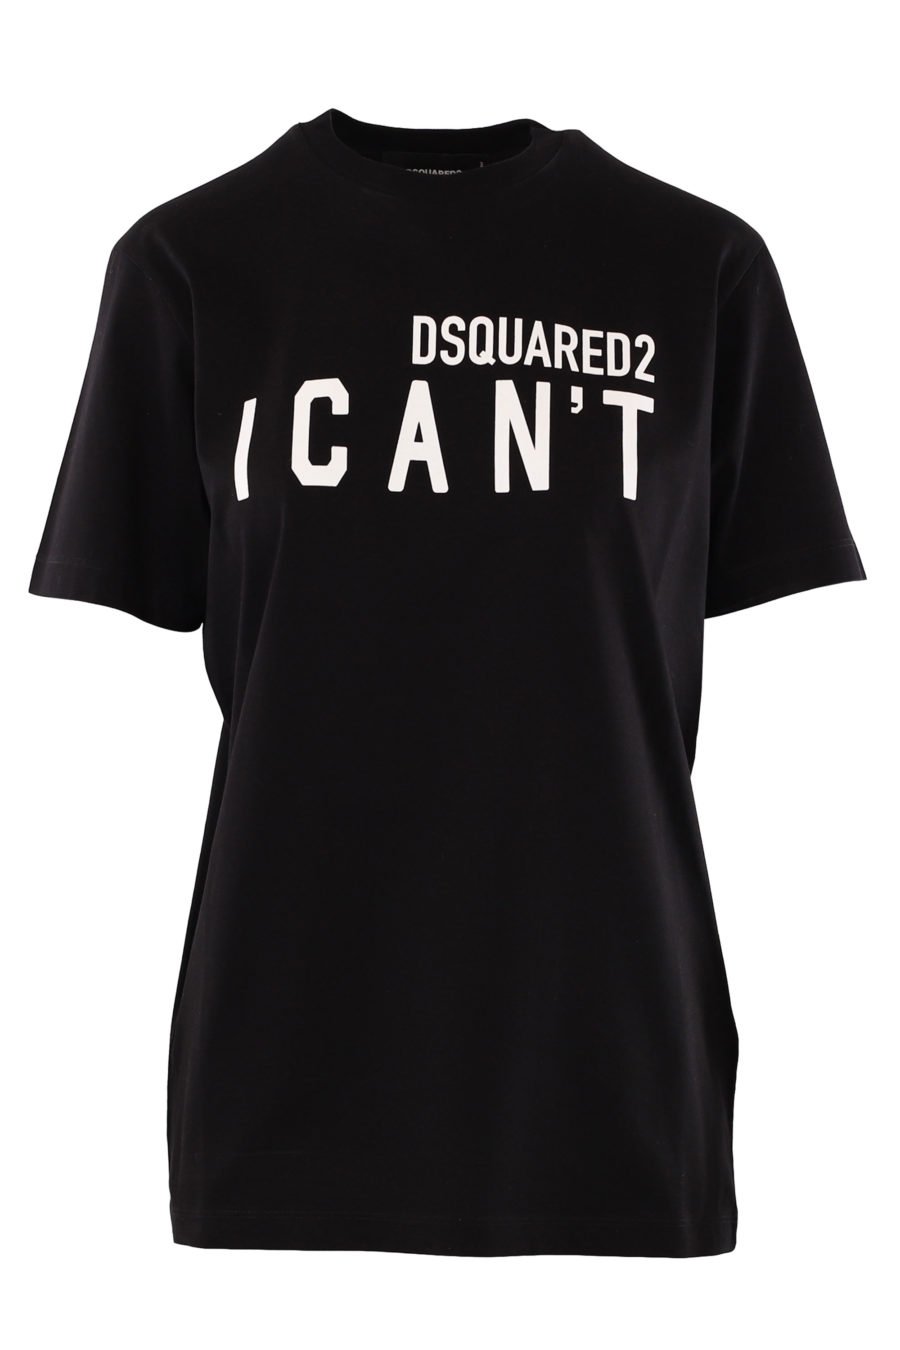 Camiseta negra con logotipo "I can't" - IMG 9859